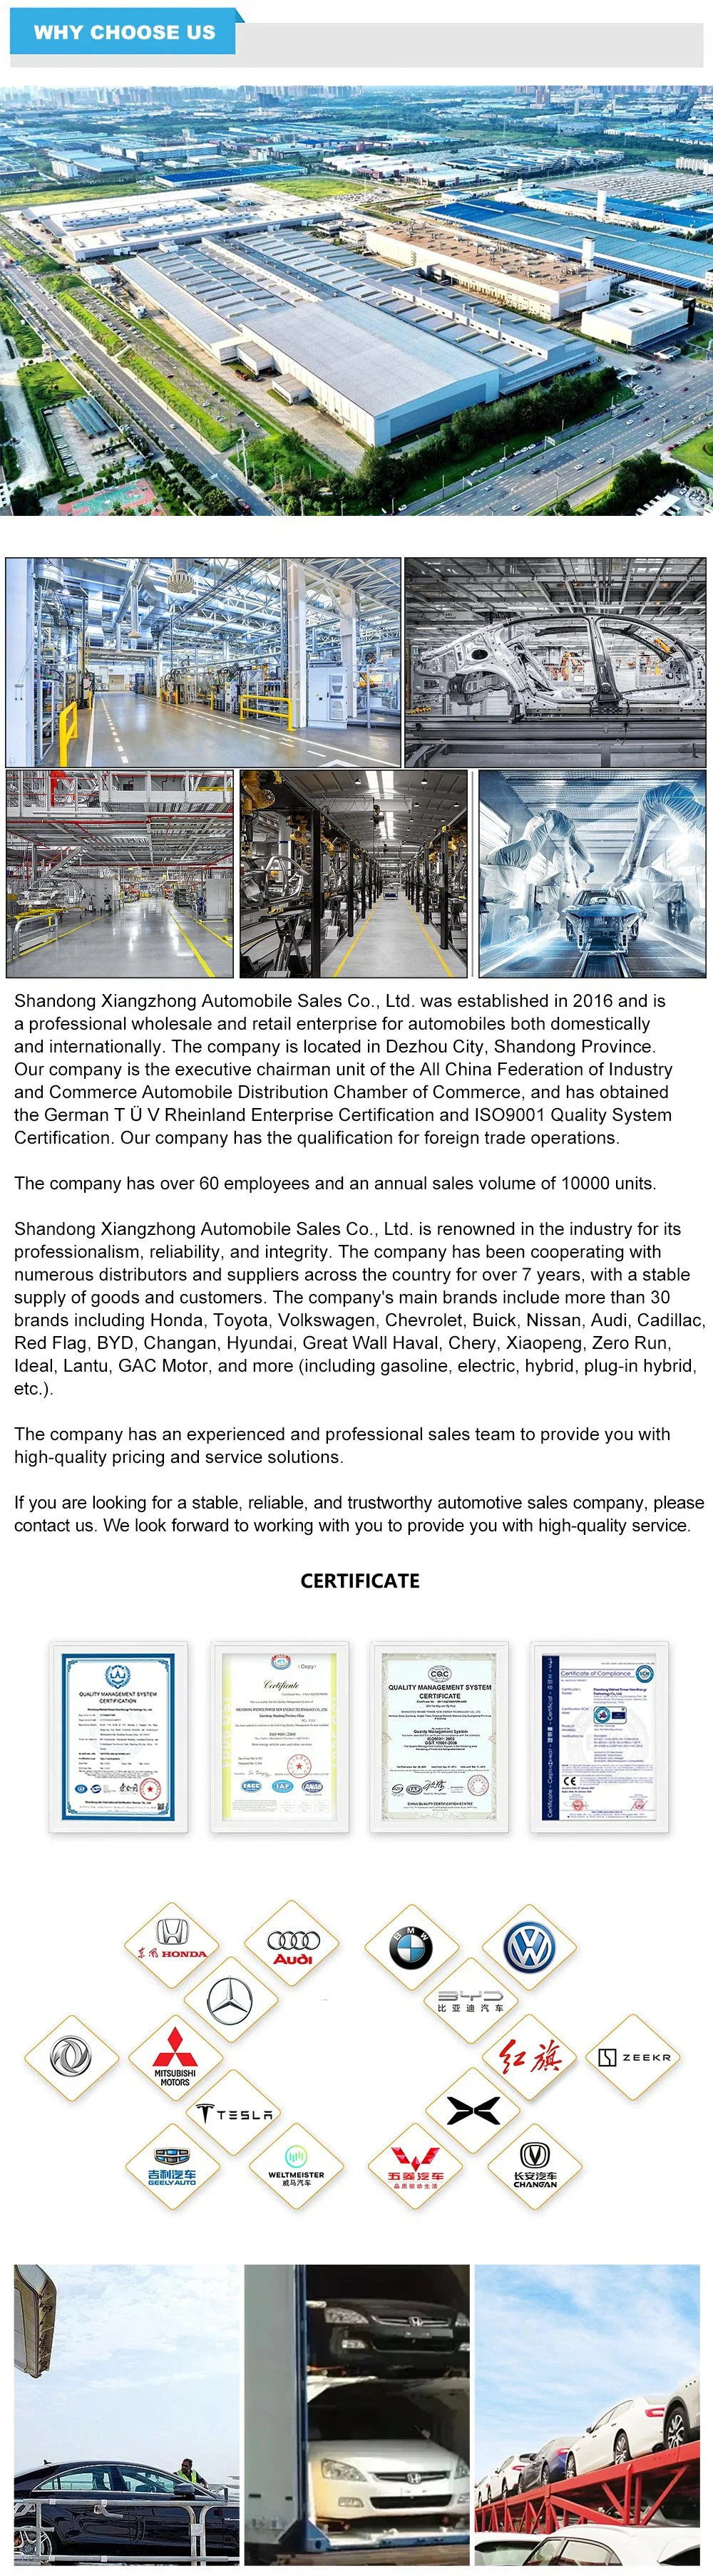 High Speed Changan Benben E-Star 4 Wheel Long Range Electrical Vehicles